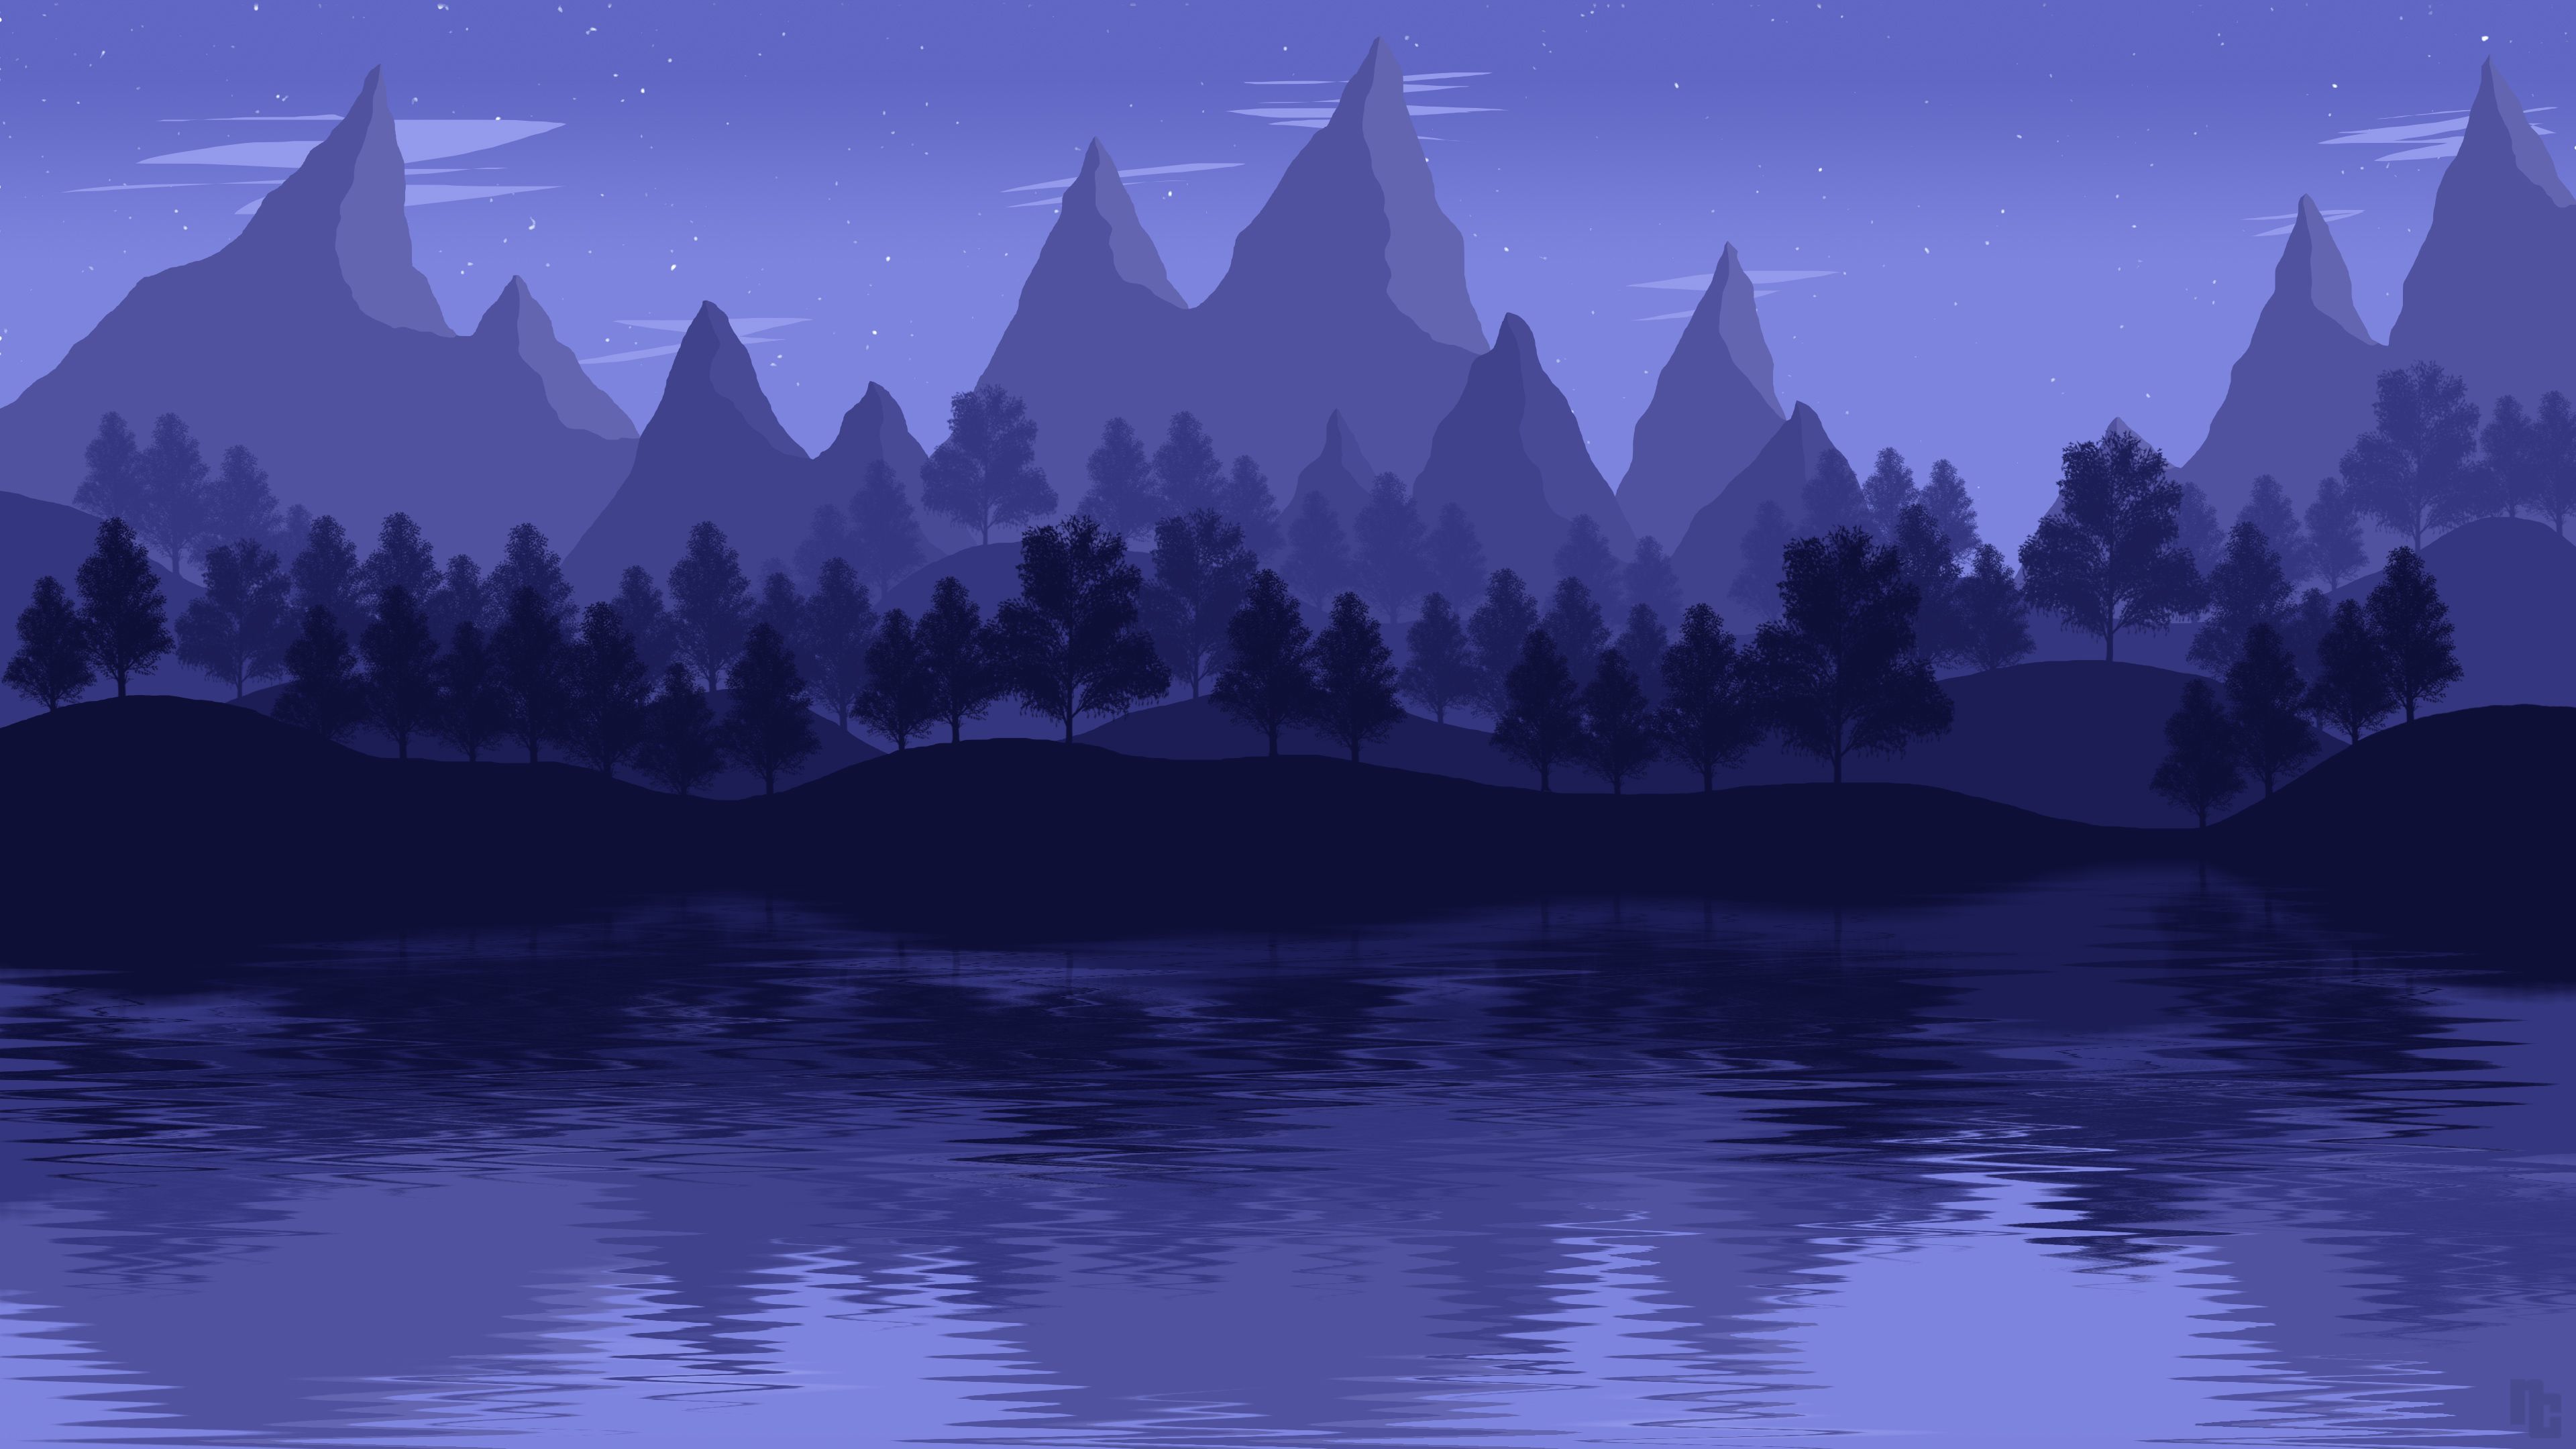 Animated Landscape Wallpapers 4k Hd Animated Landscape Backgrounds On Wallpaperbat